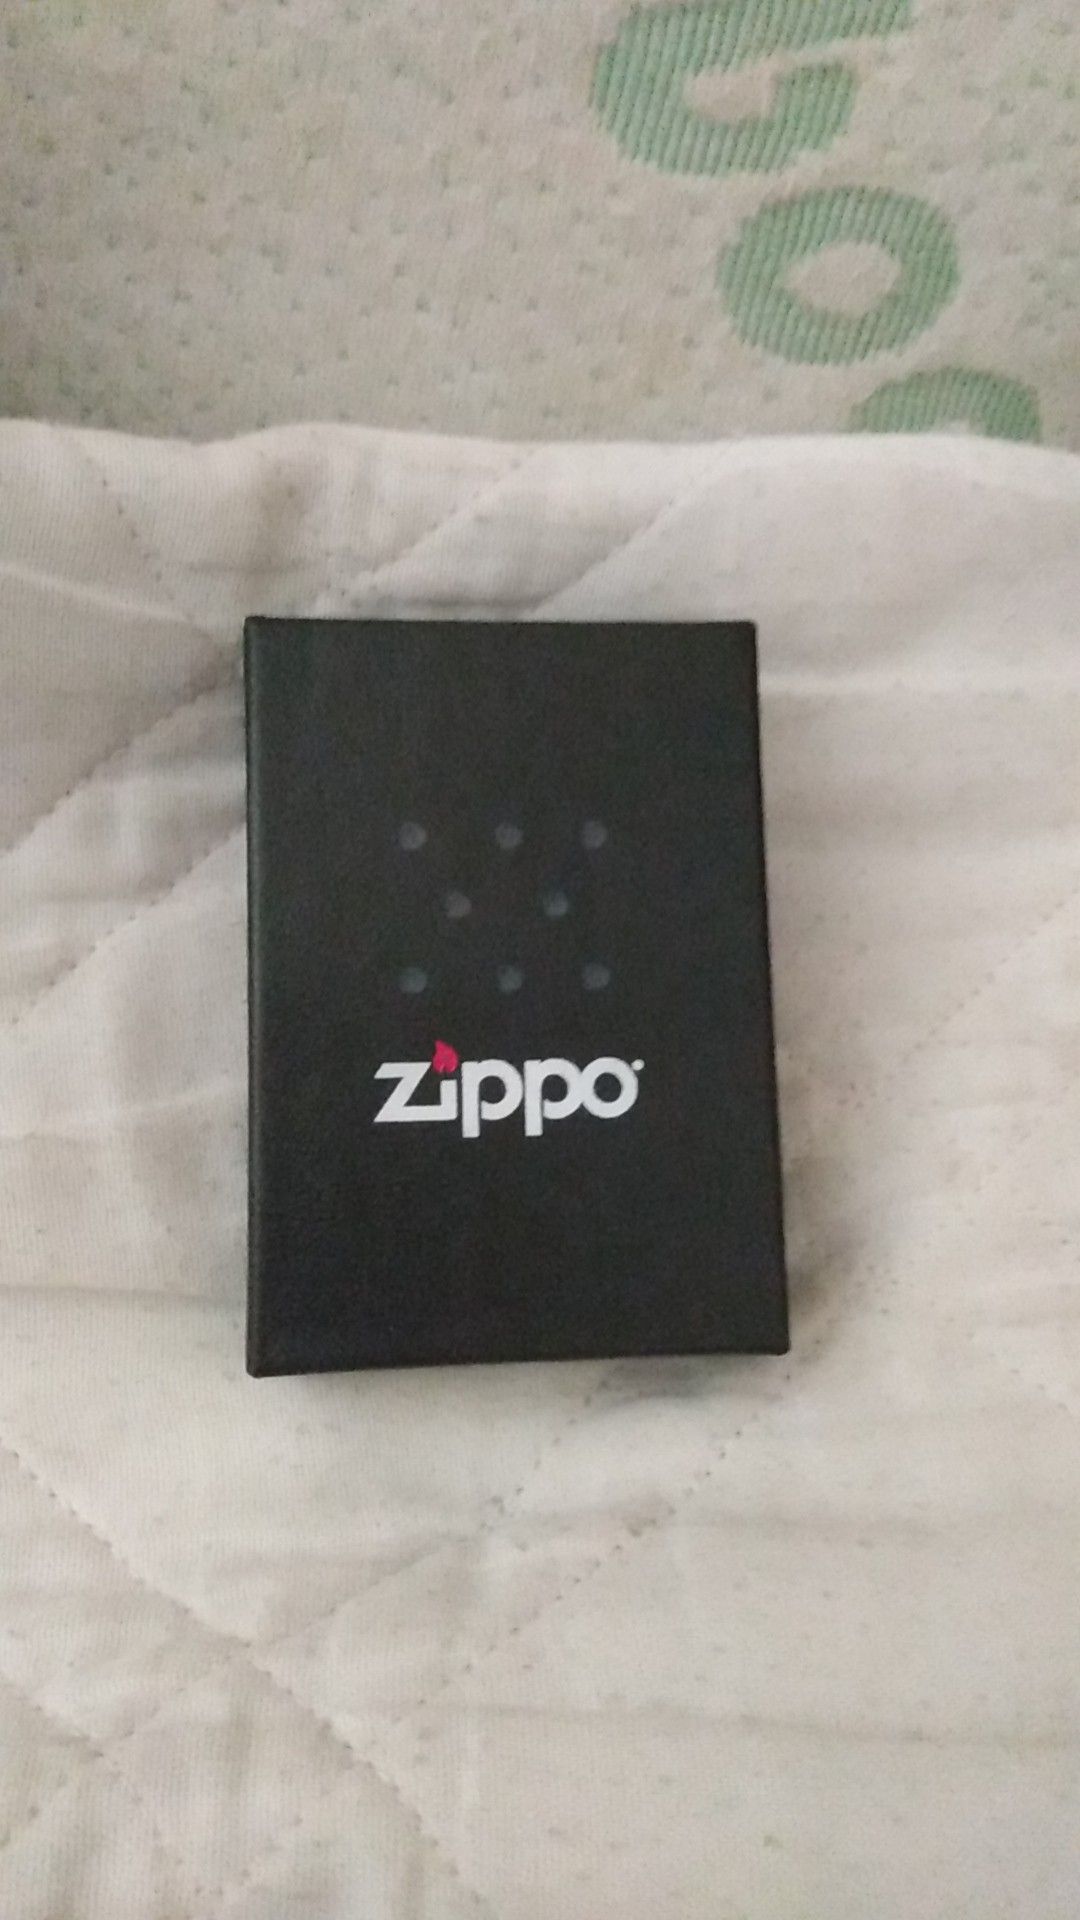 Zippo, Bob Marley zippo lighter